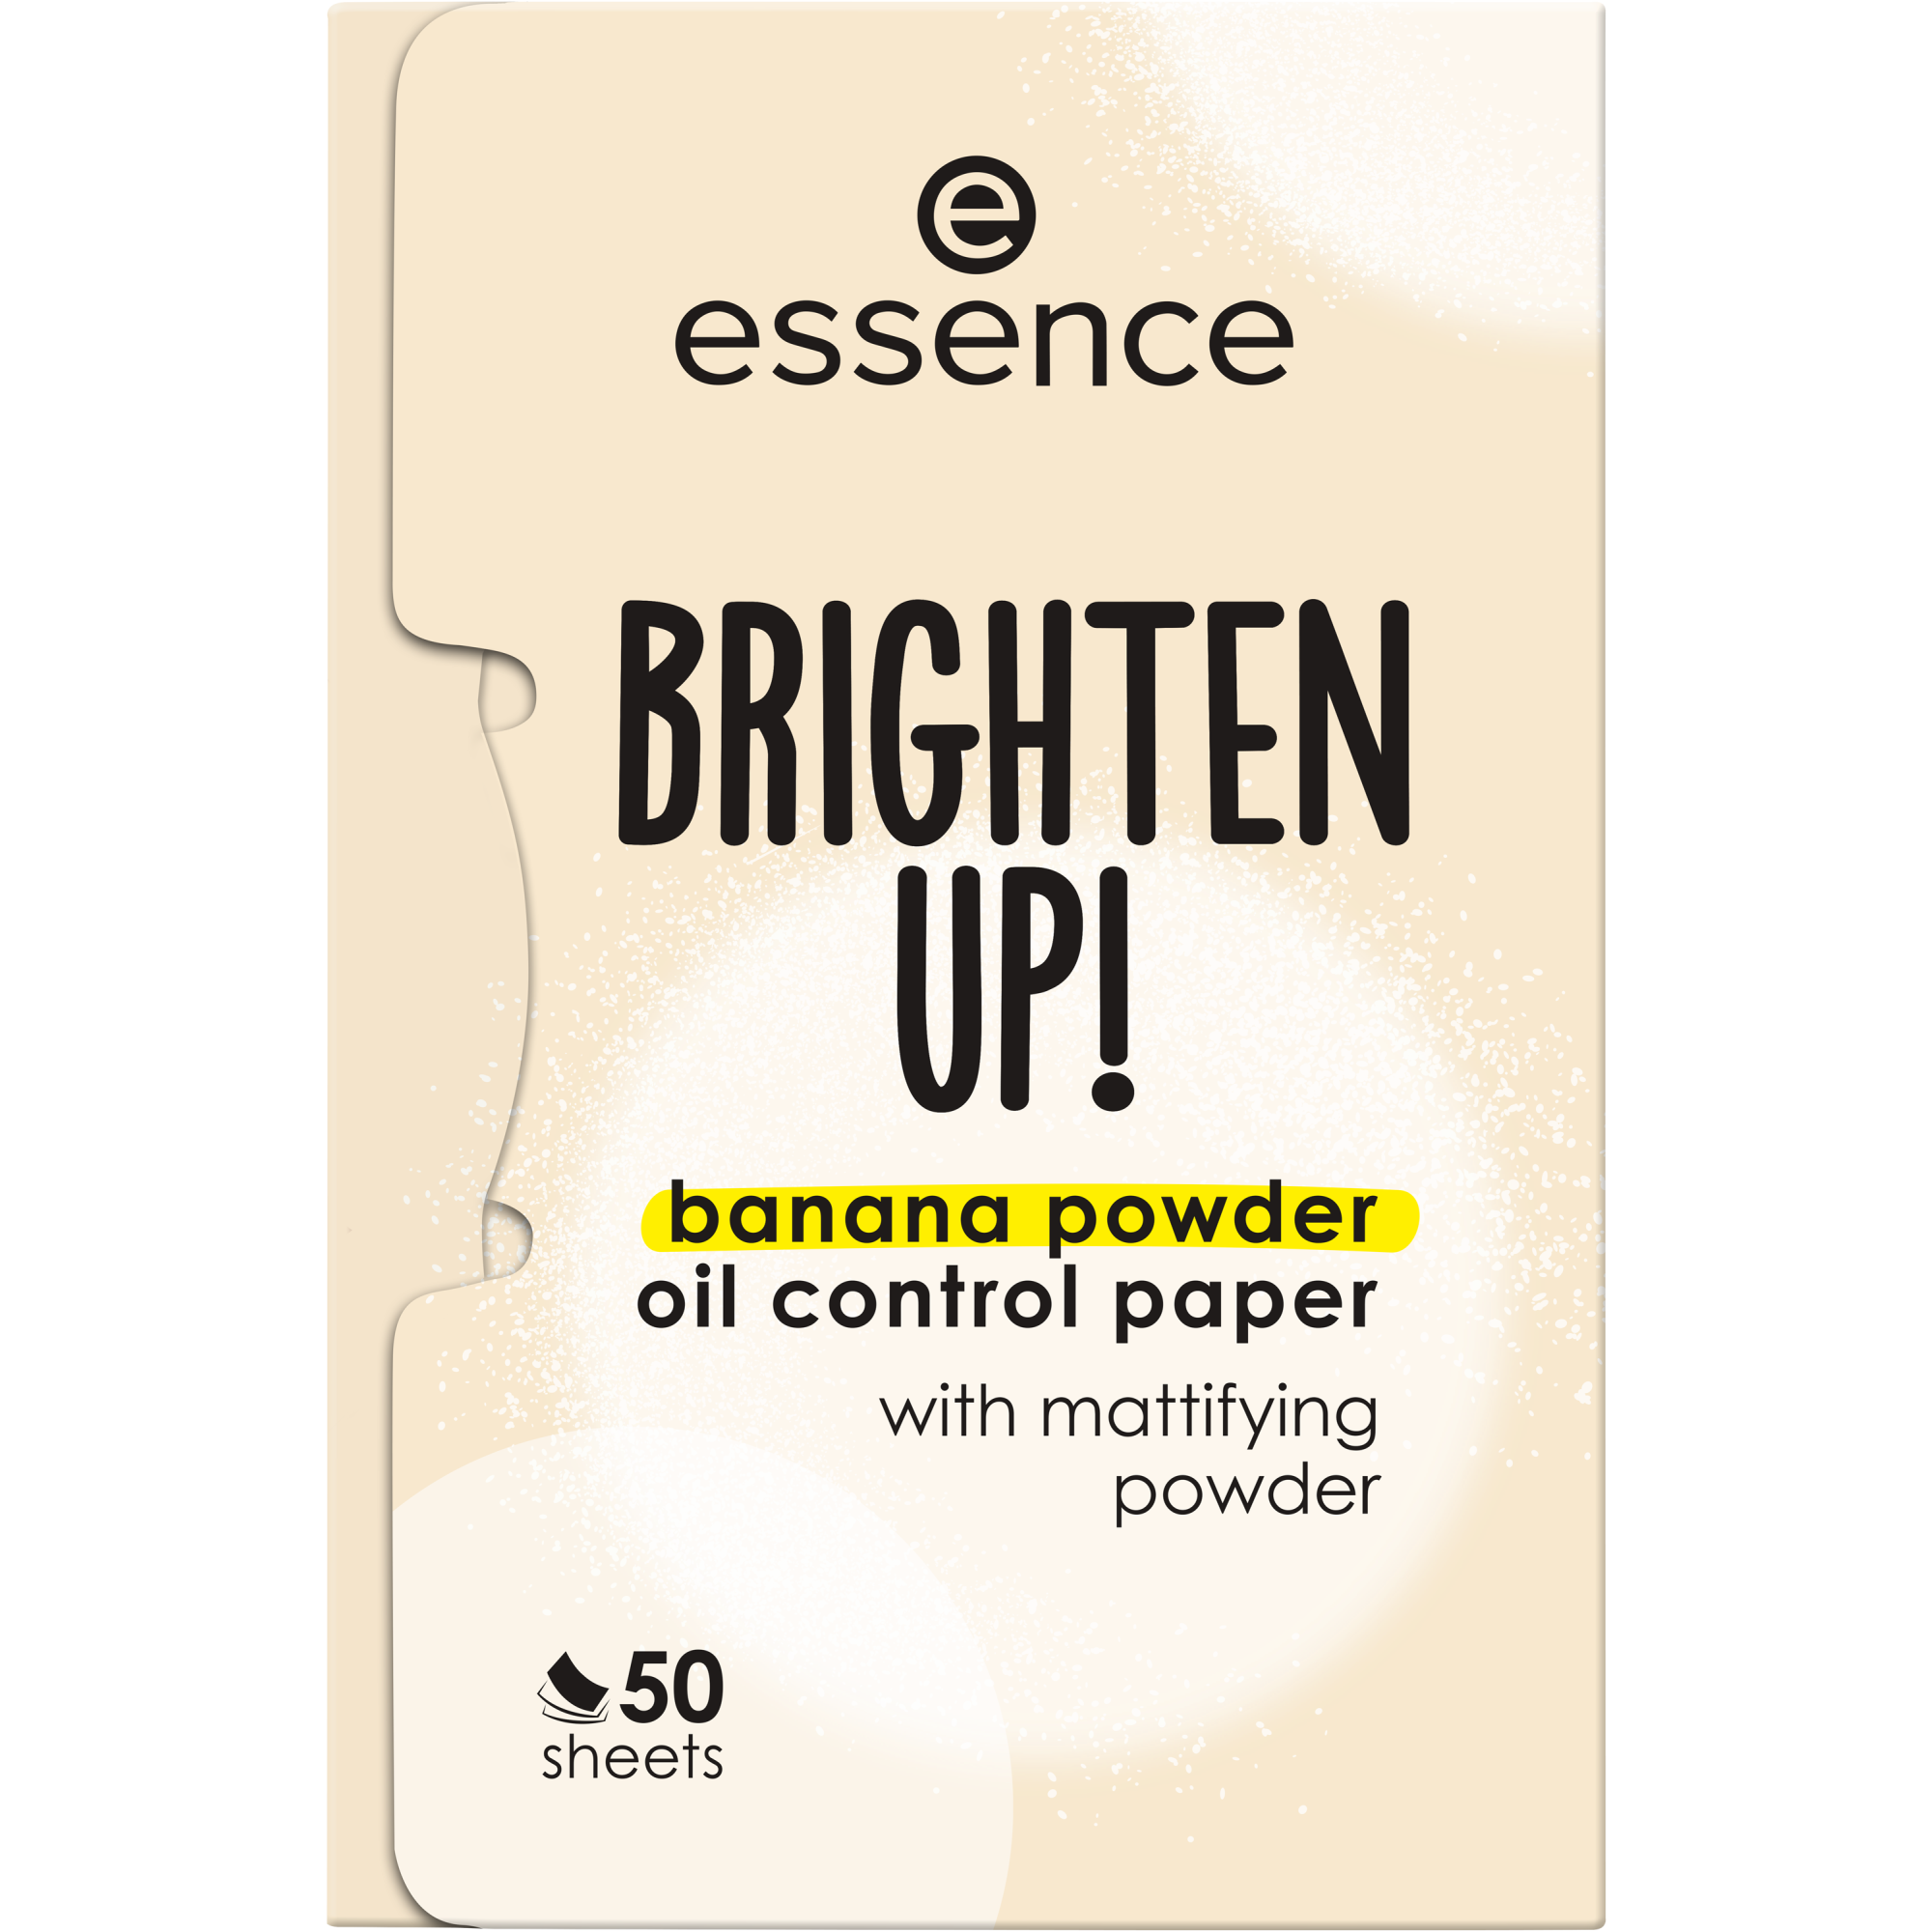 BRIGHTEN UP! banana powder oil control paper